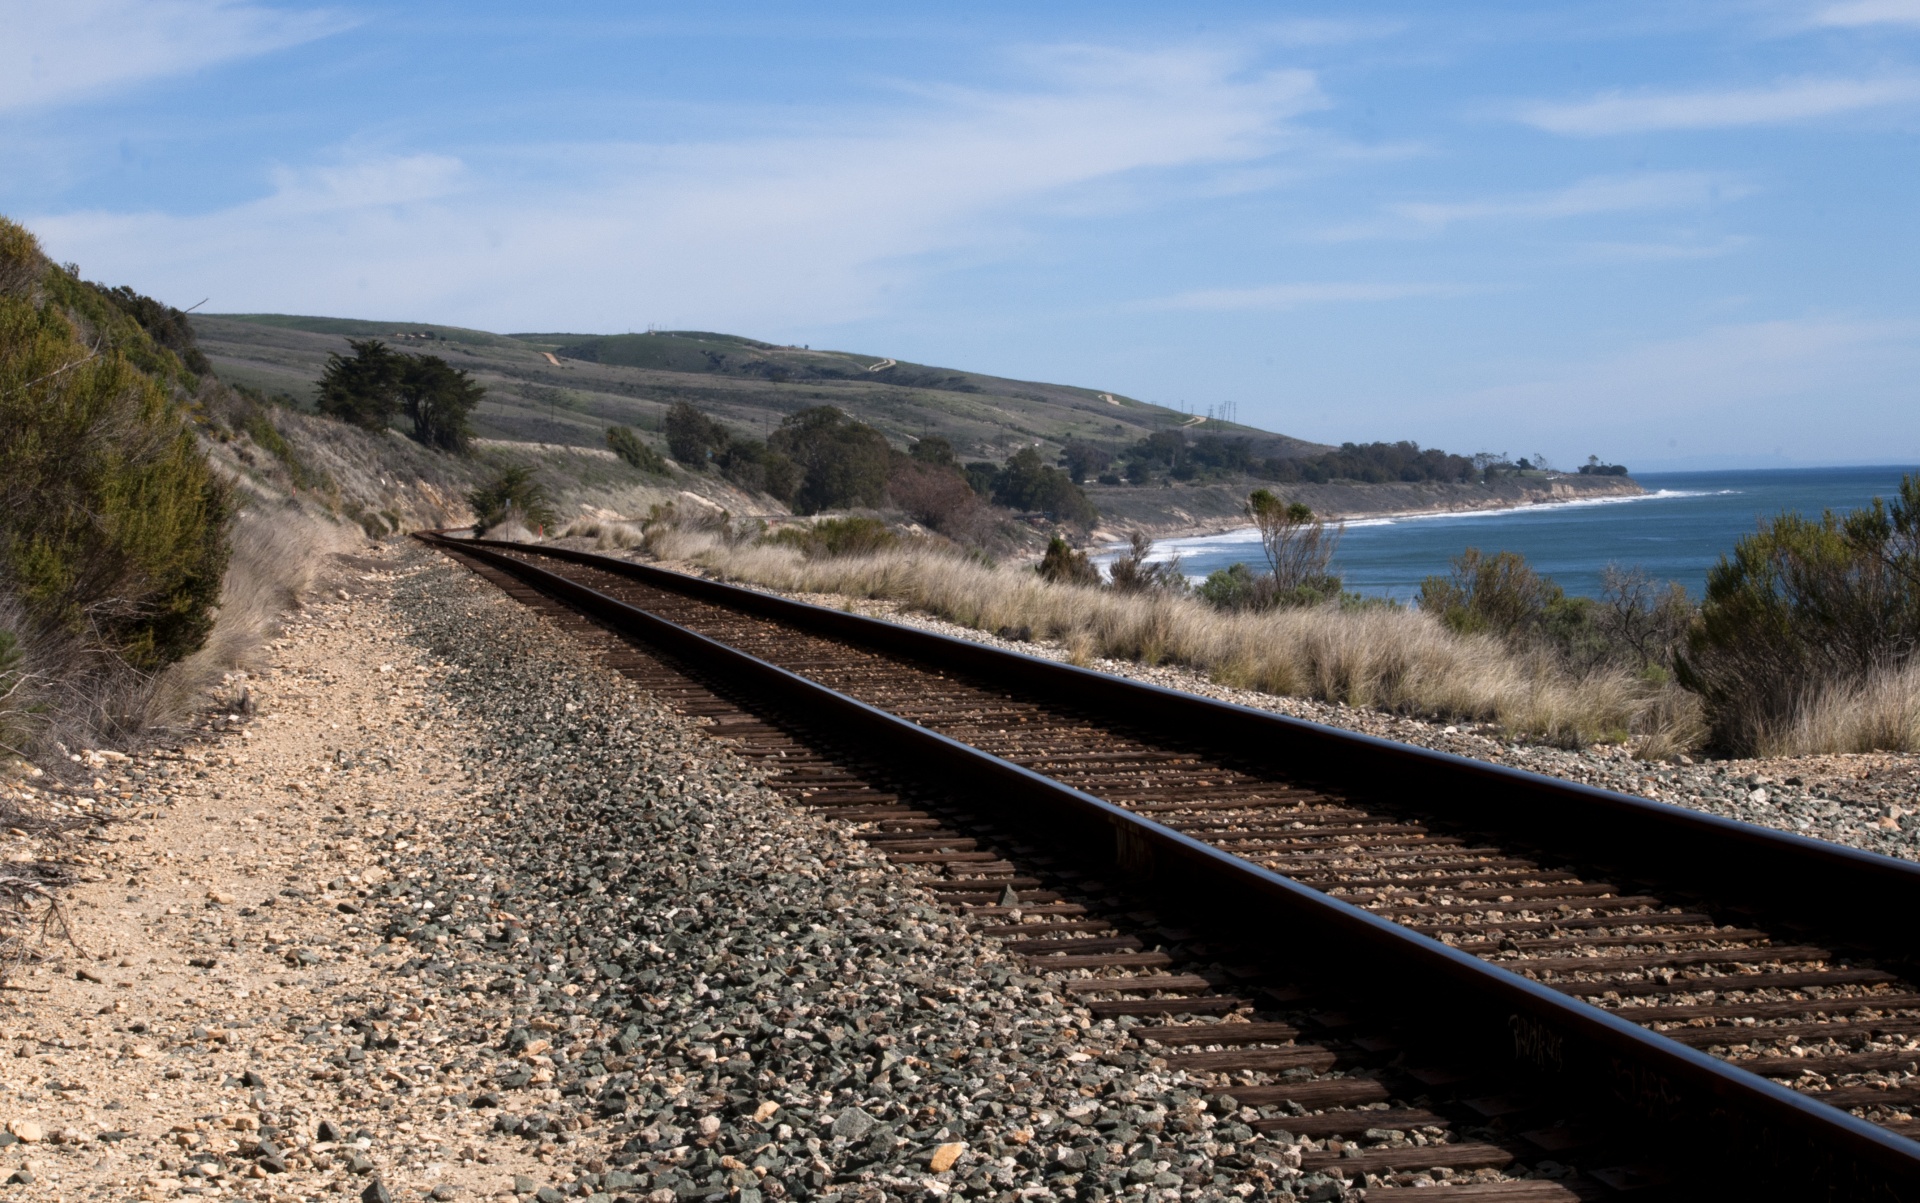 Railroad Tracks Along The Sea